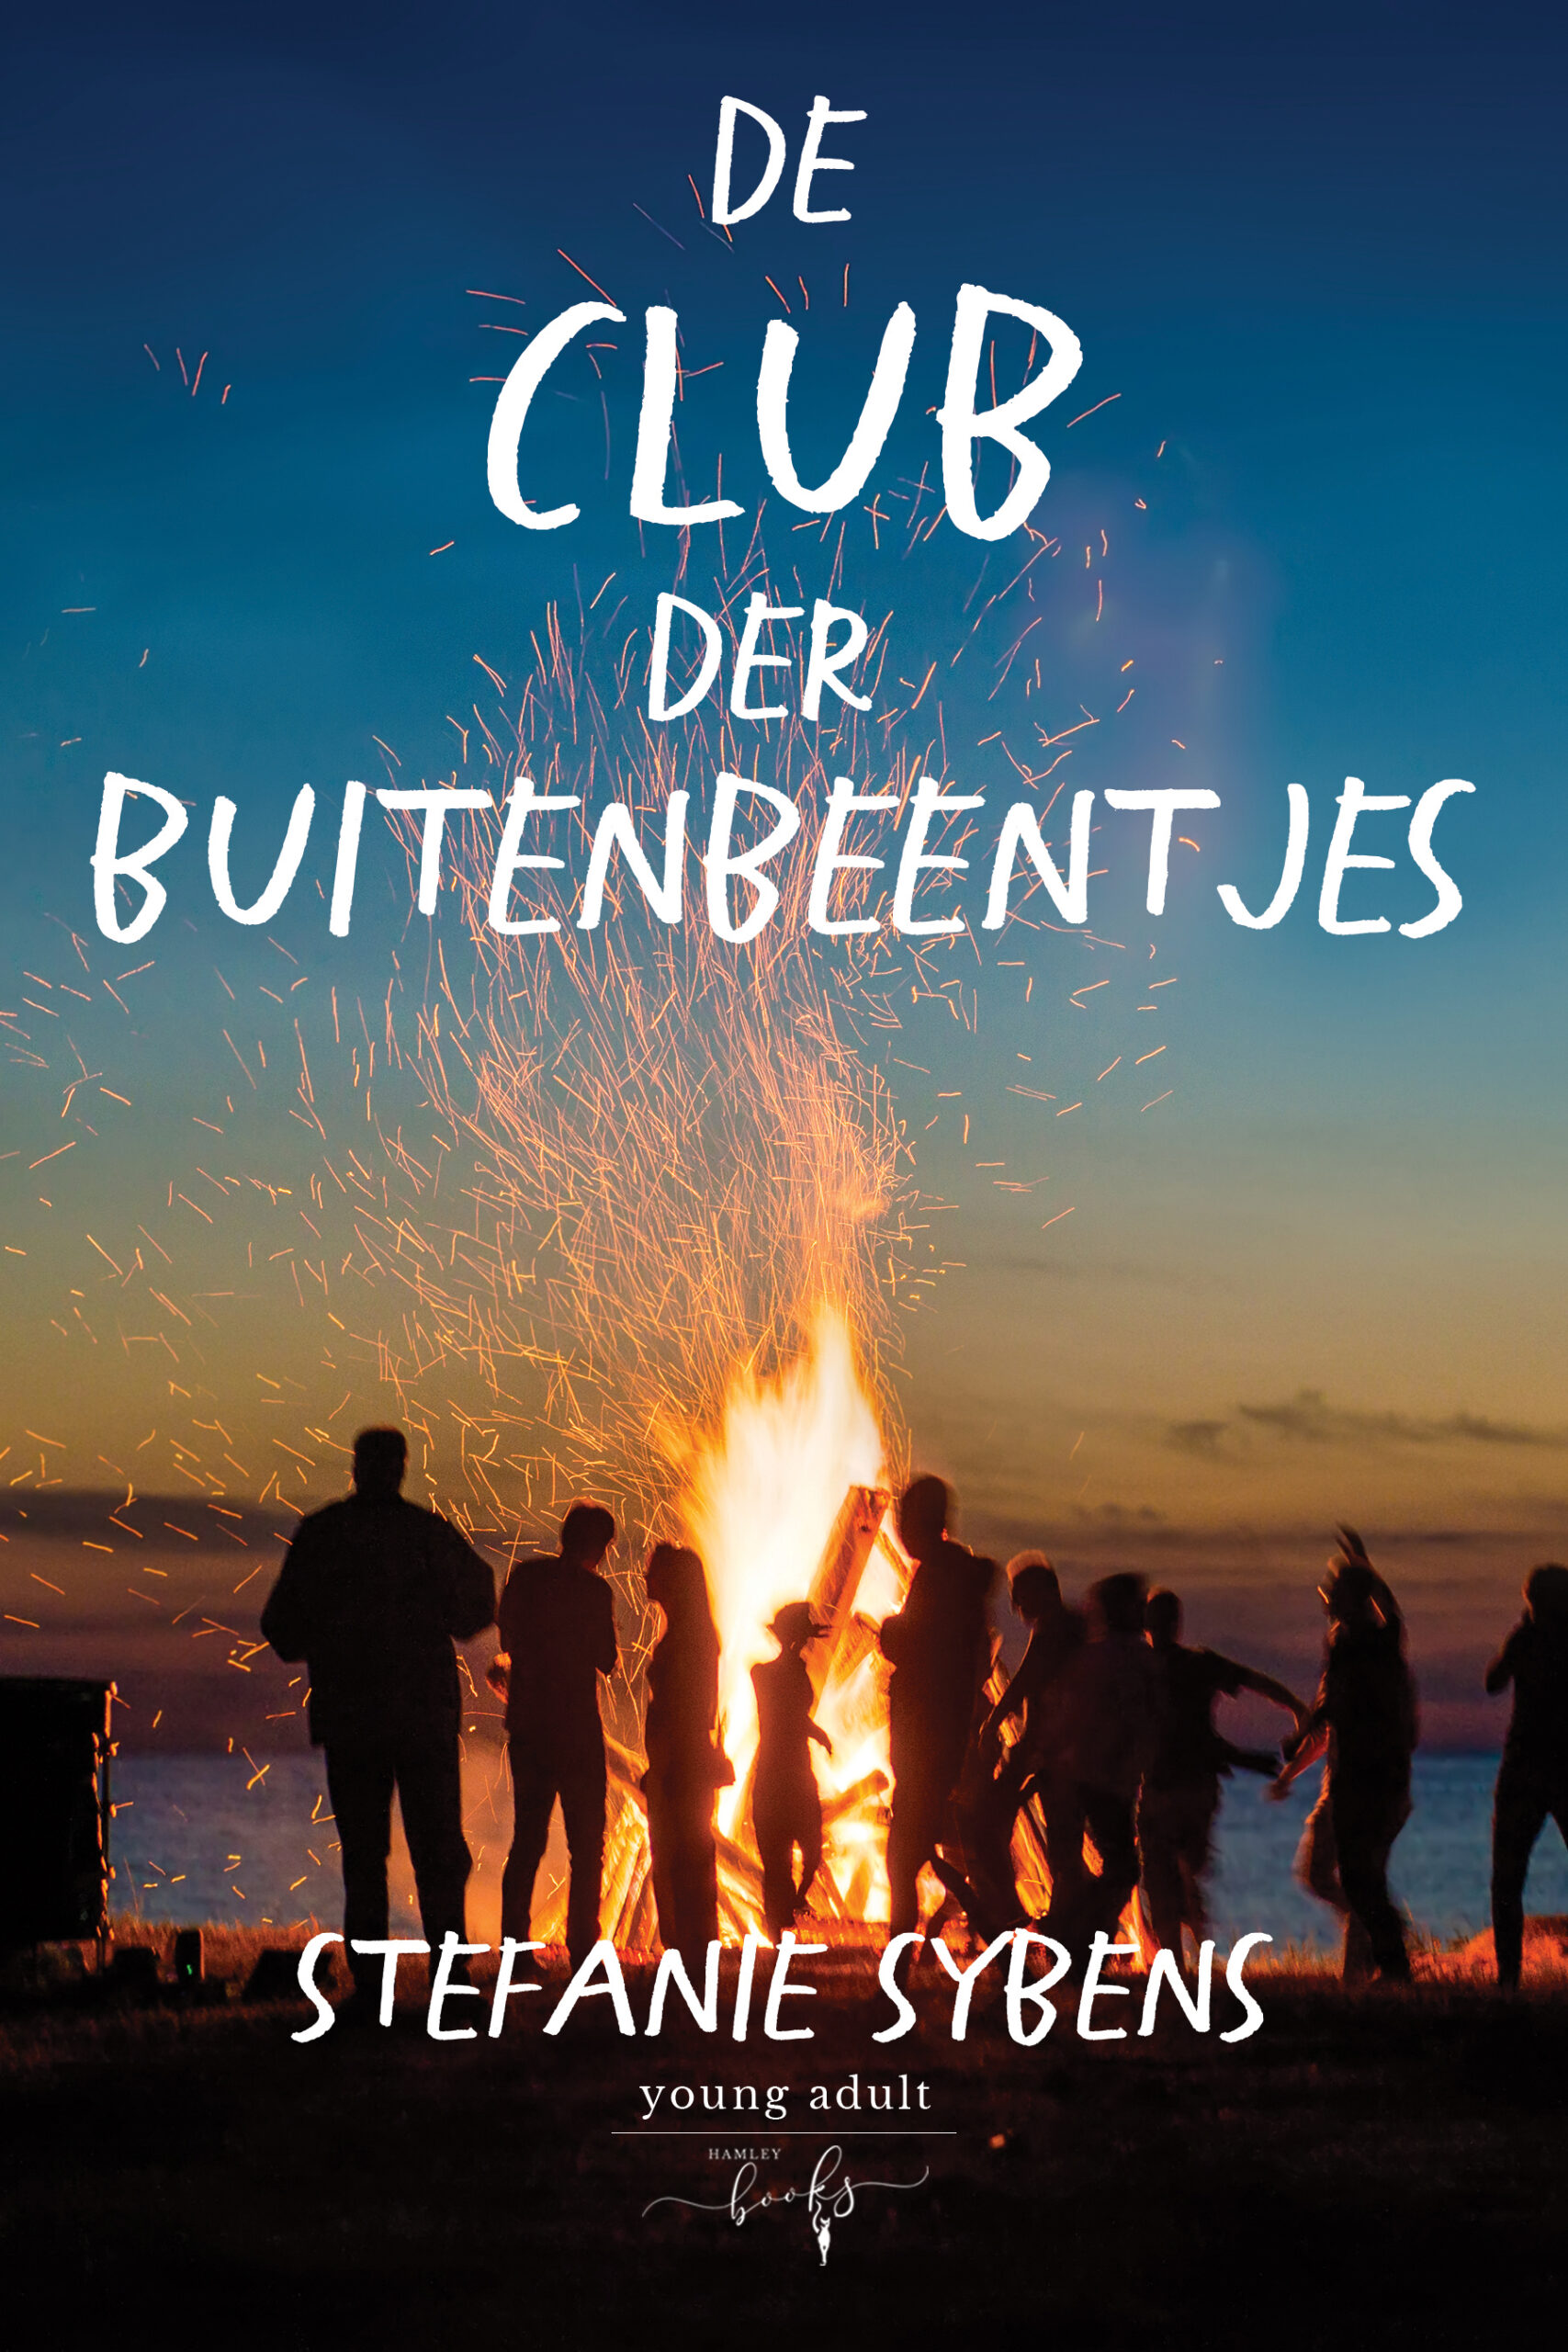 De Club der Buitenbeentjes - Stefanie Sybens - Young Adult - HamleyBooks